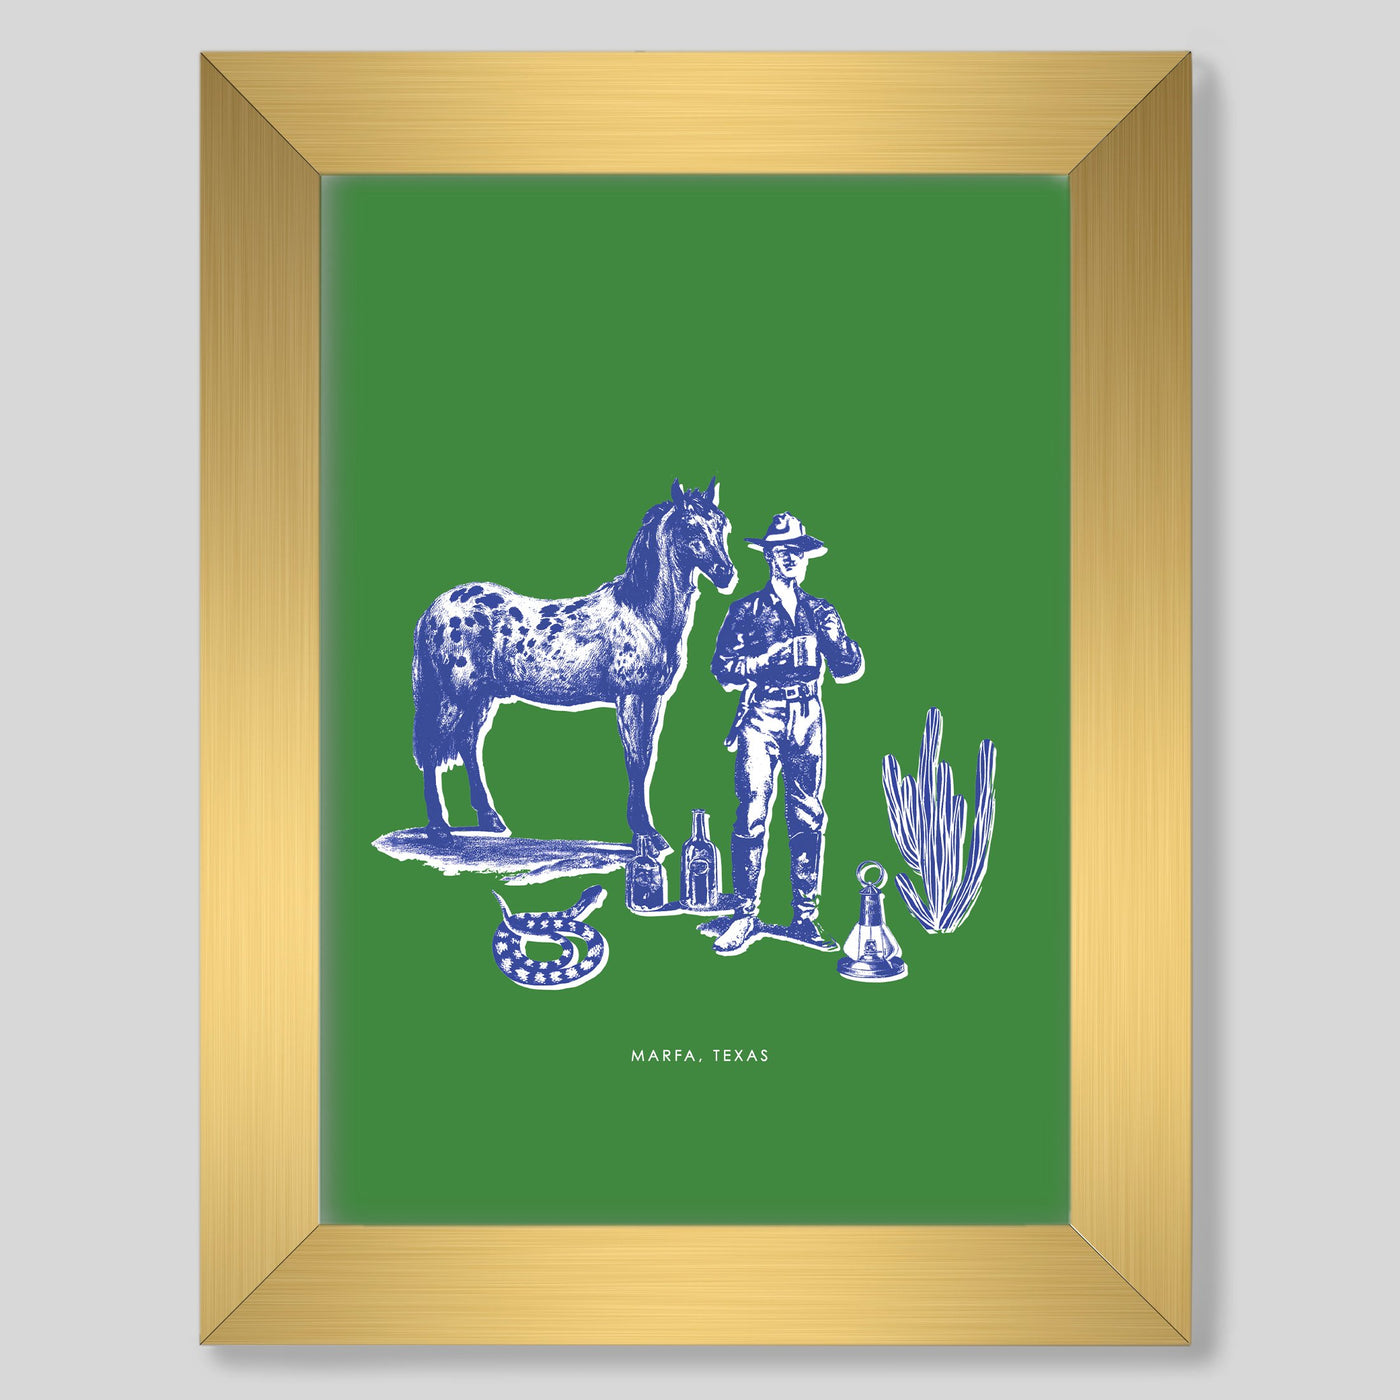 Gallery Prints Green / 8x10 / Gold Frame Marfa Cowboy Print dombezalergii